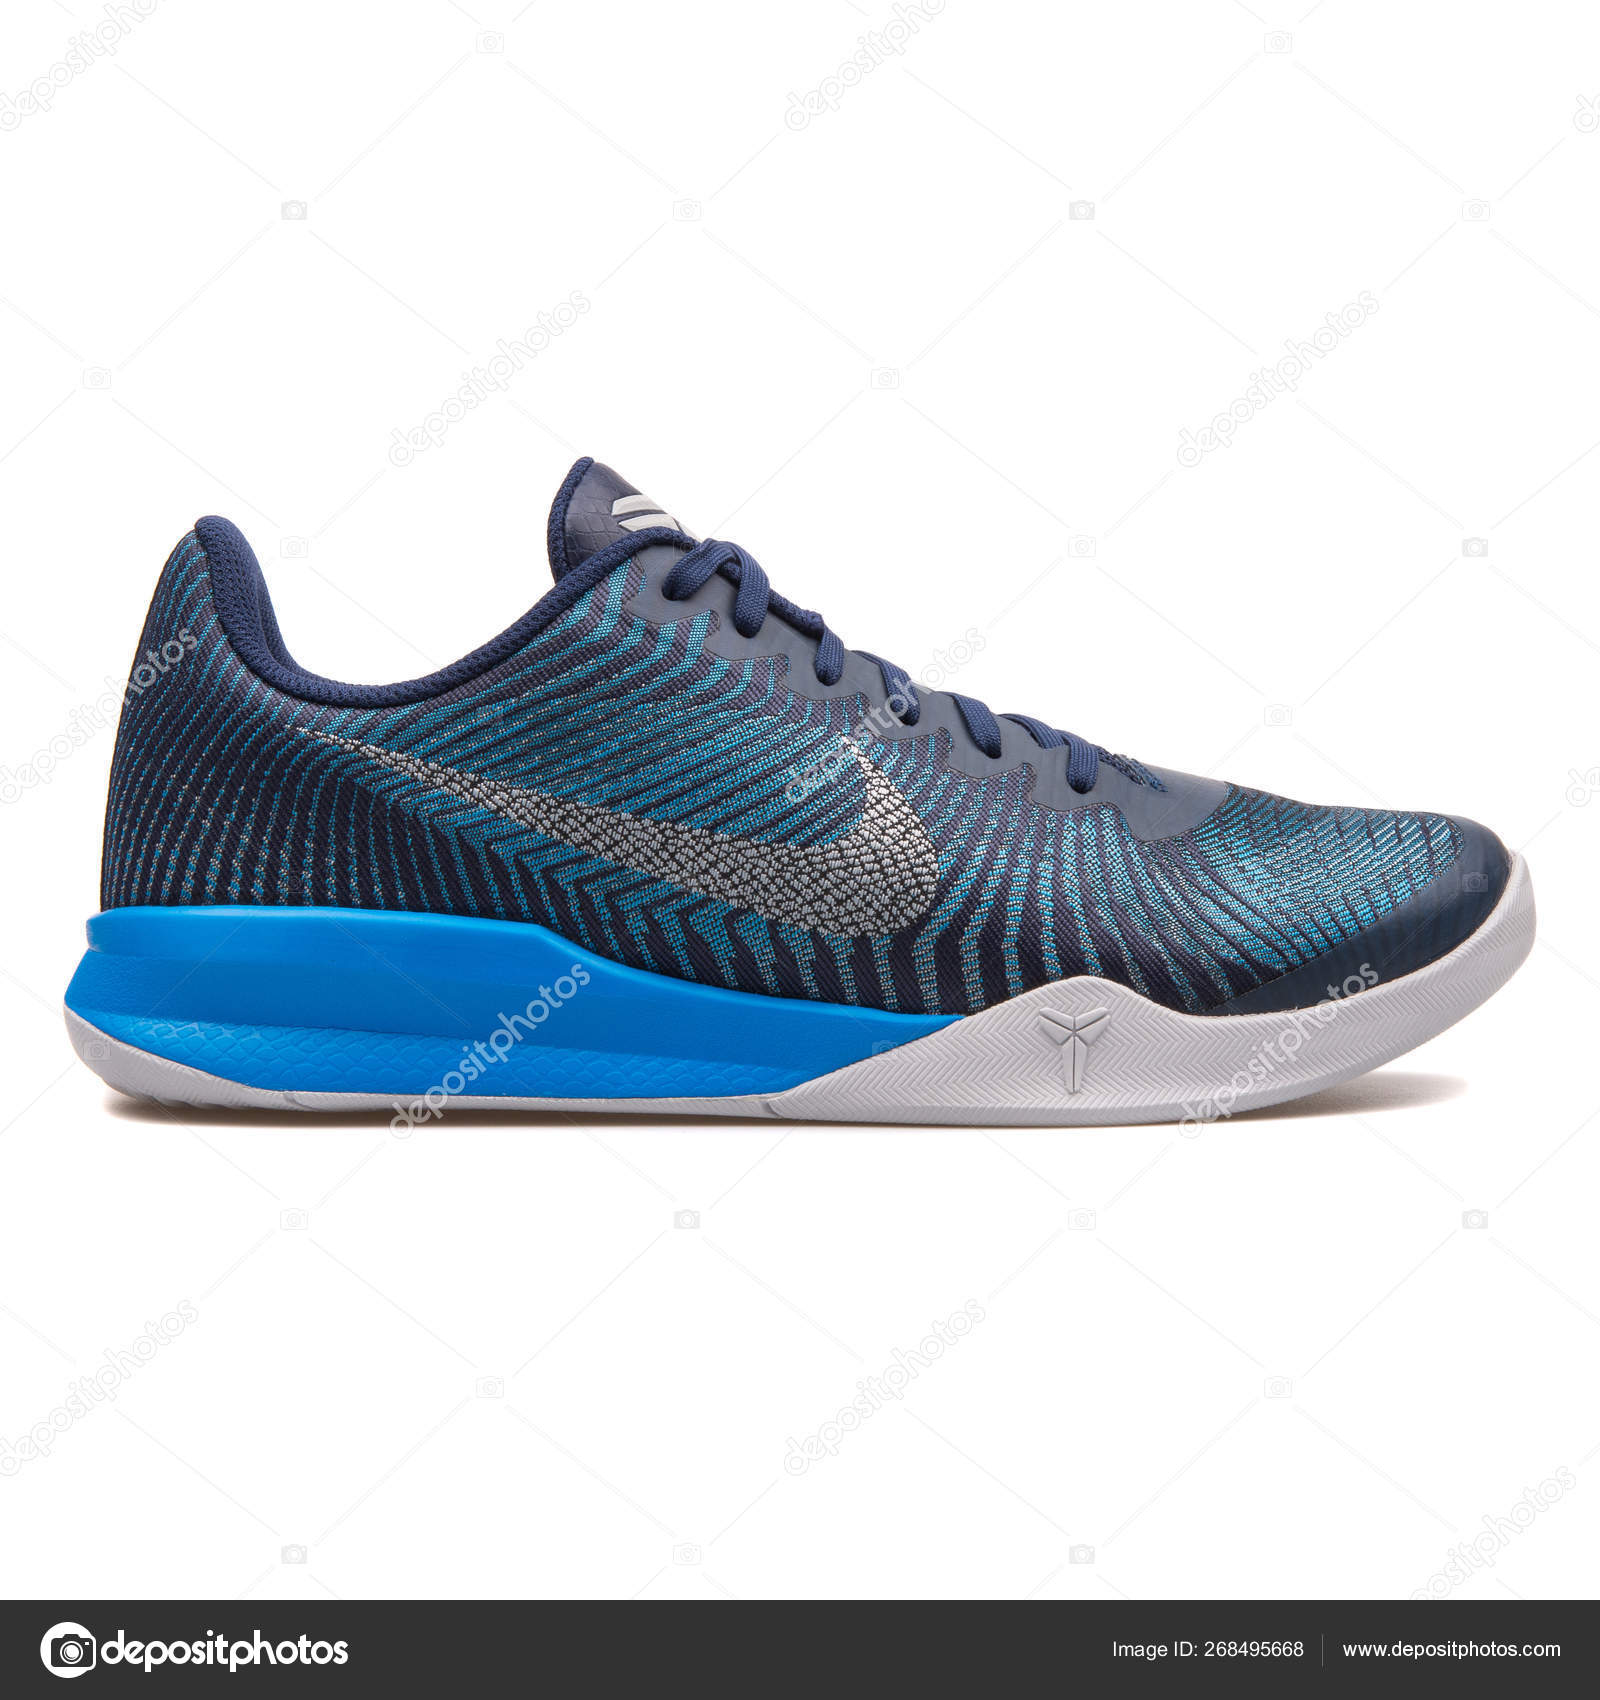 Nike Kobe Mentality 2 navy blue and 